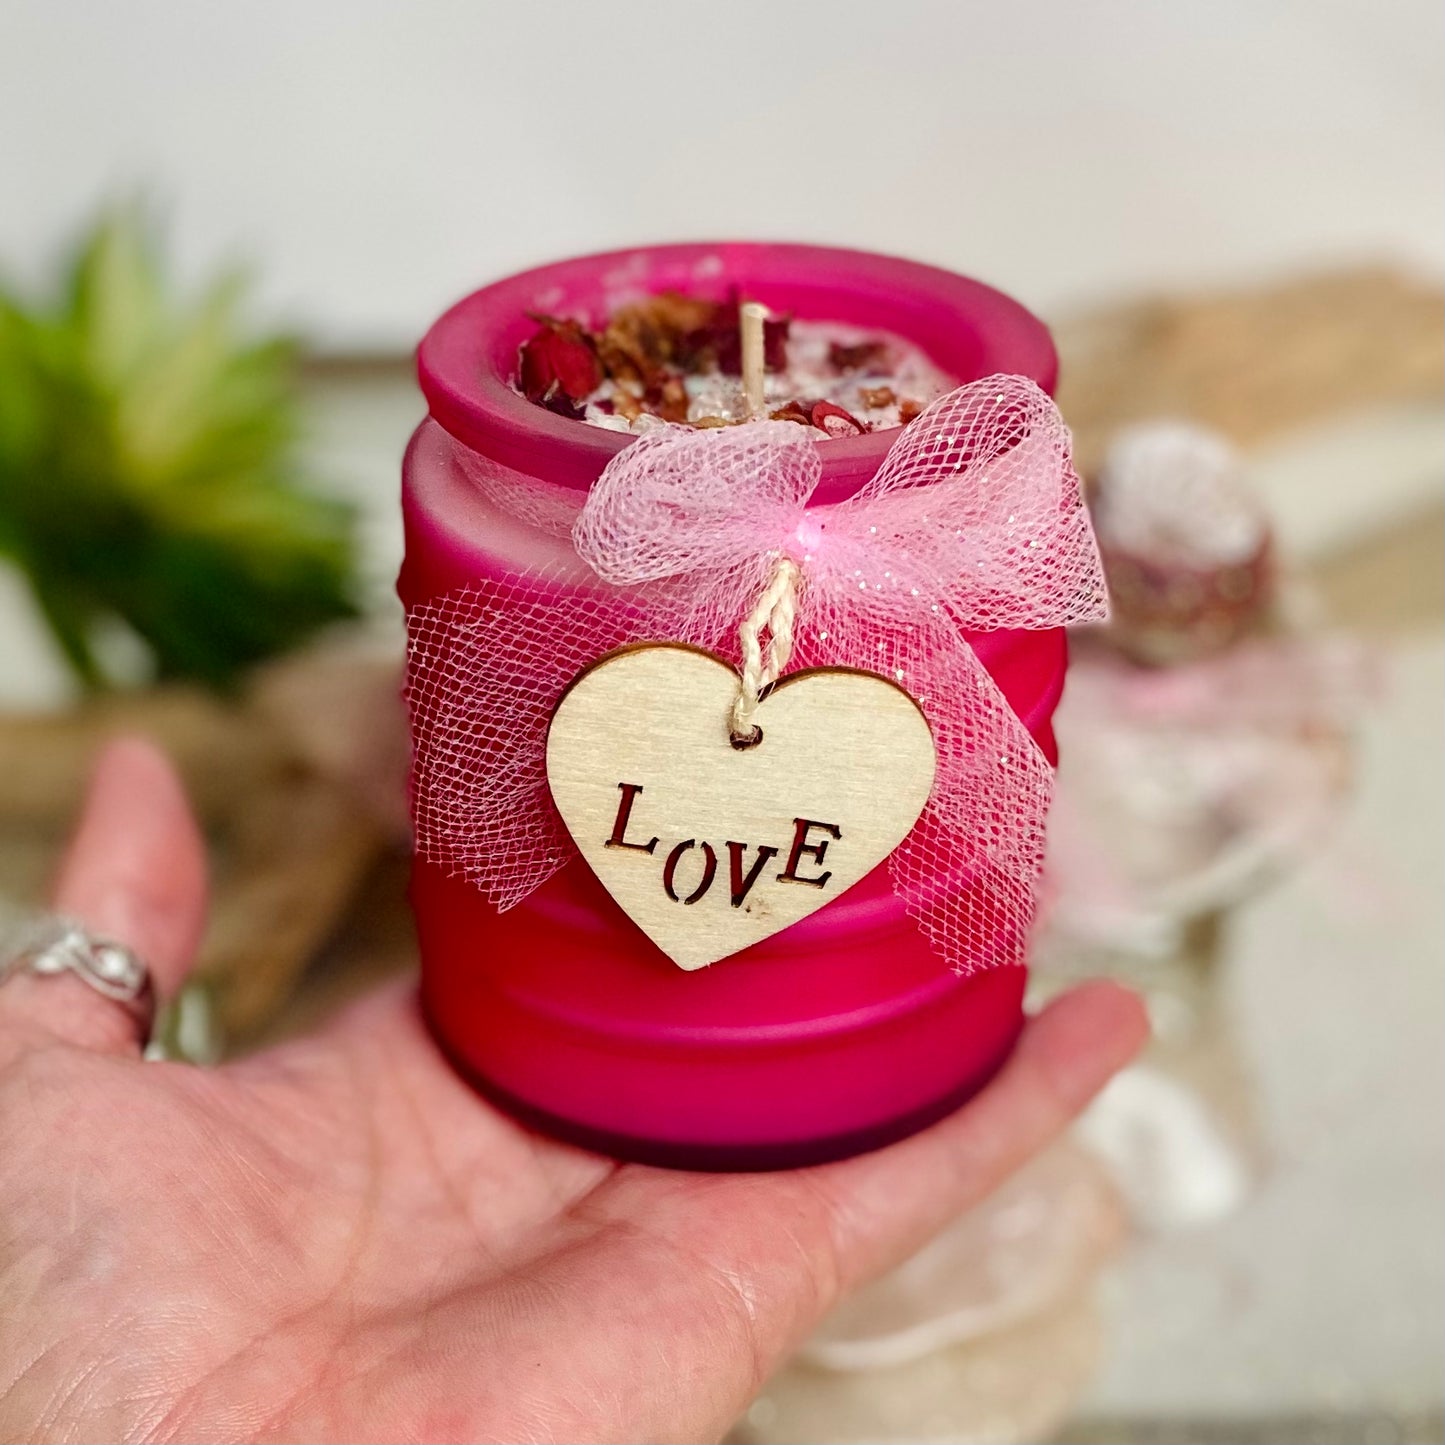 Trio of Love Gift Set: Decorated Love Candle, Heart Jar Bath Salts, Rose Quartz Crystal